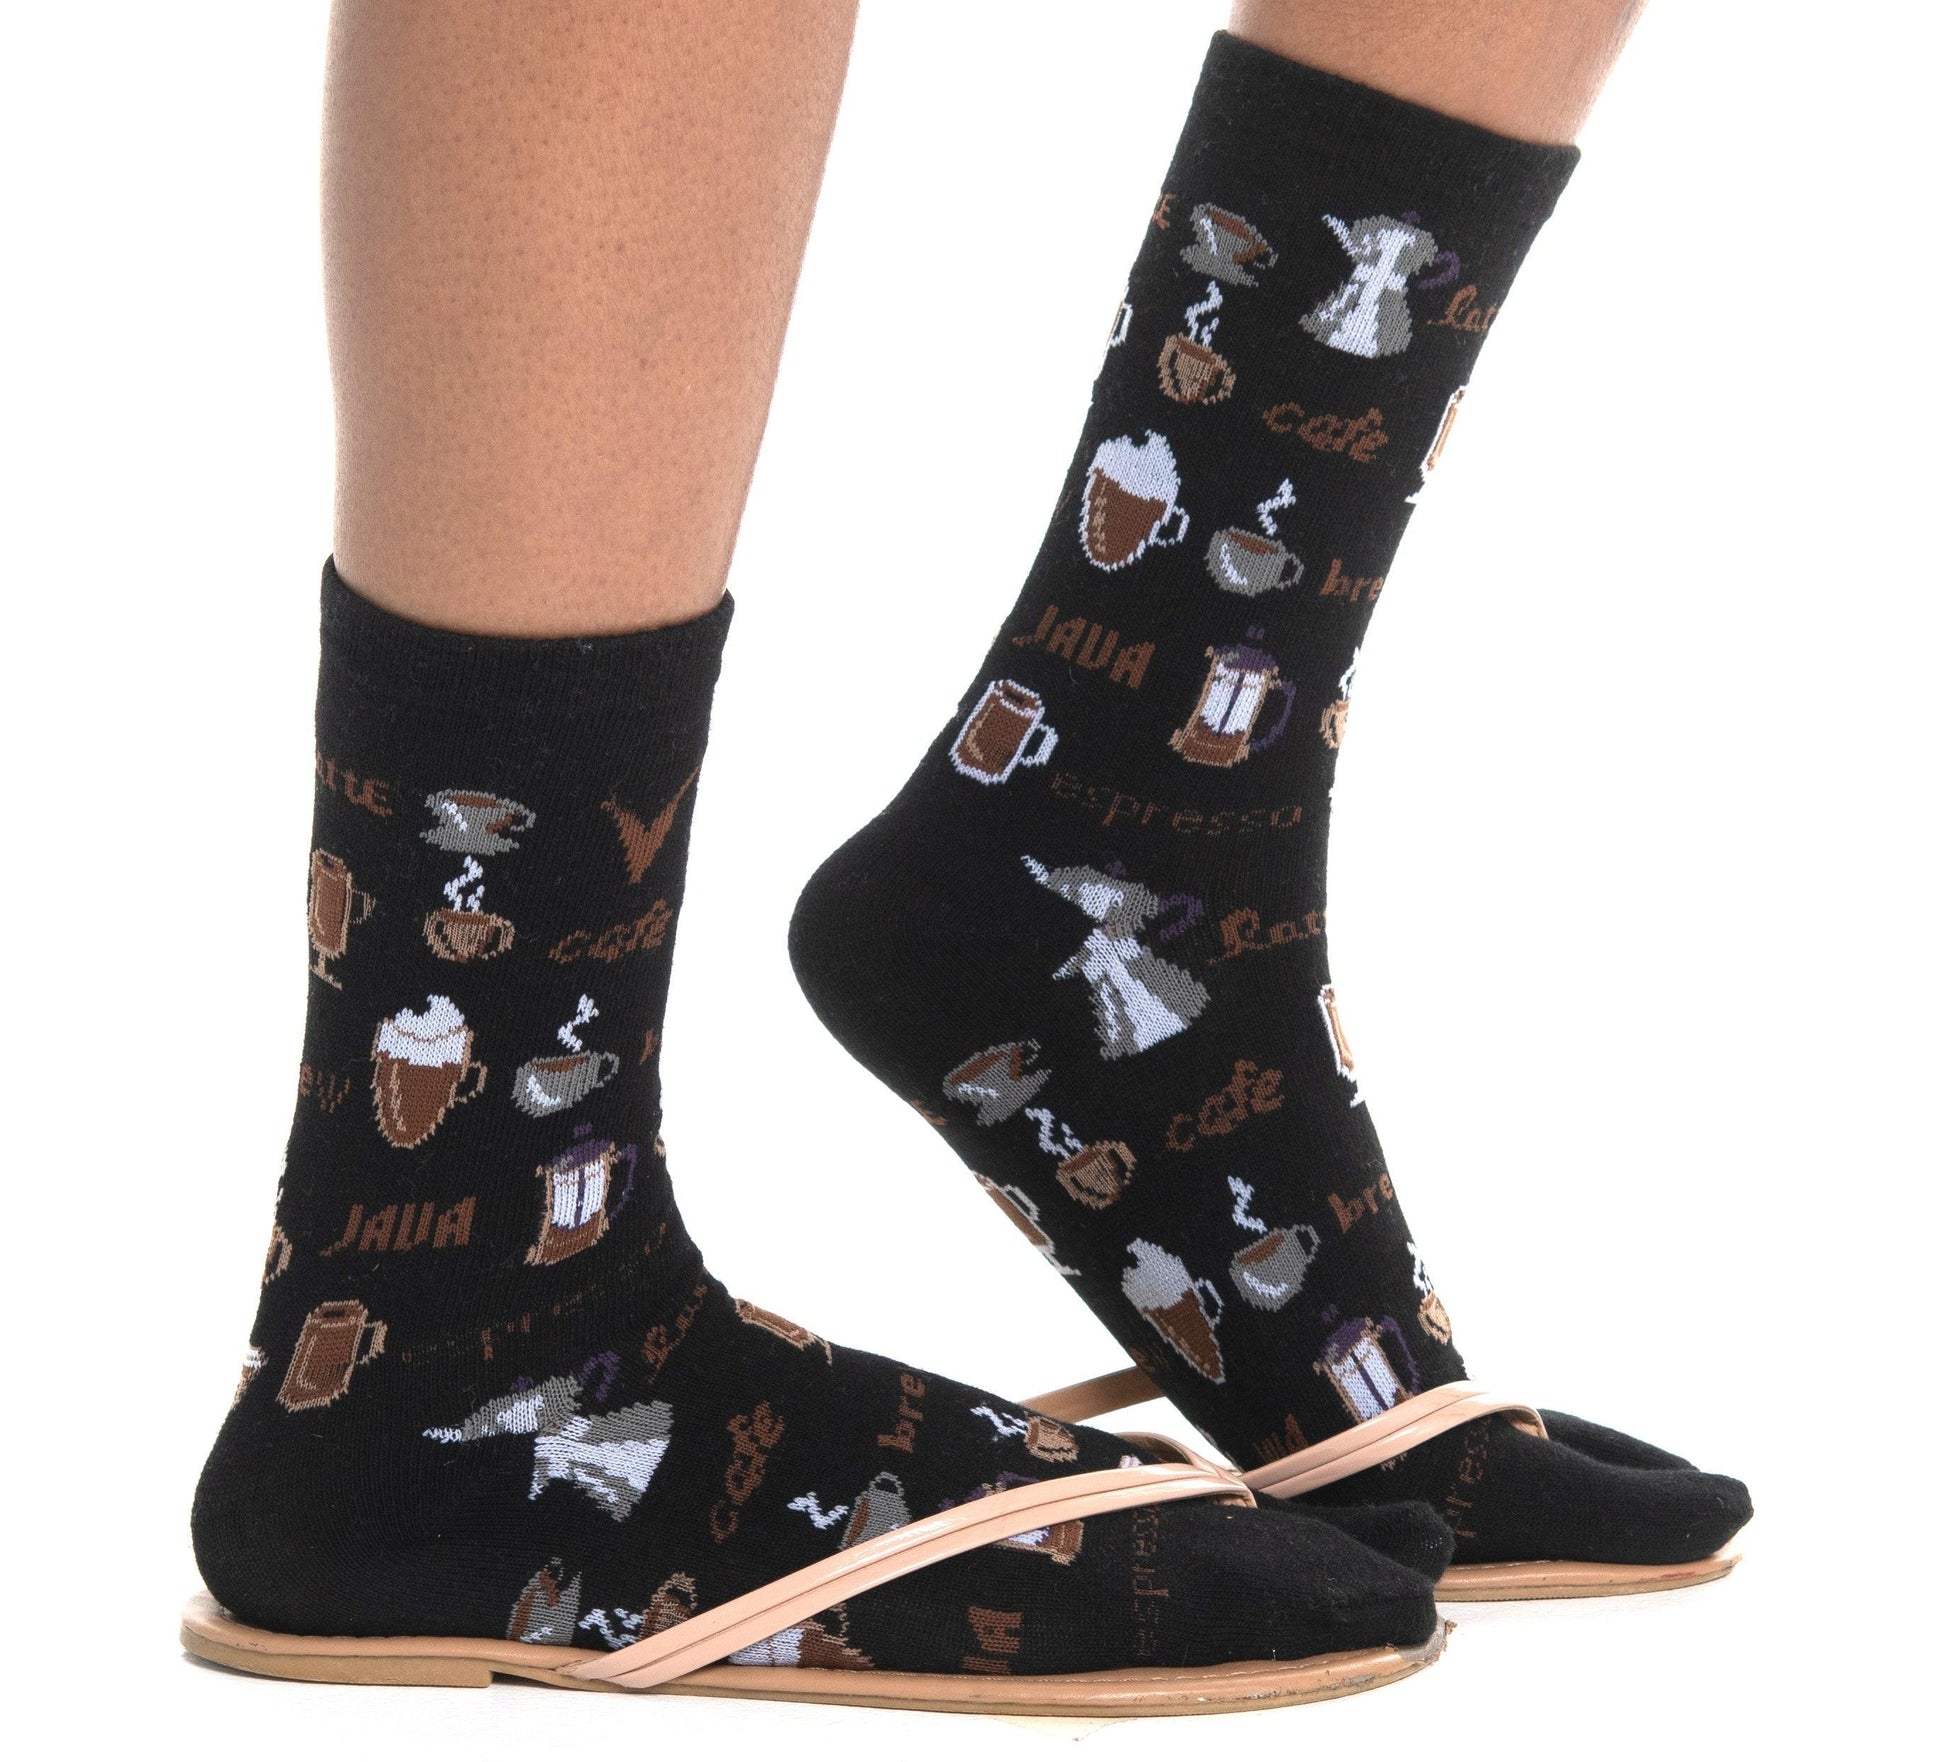 1 Pair - V-Toe Flip Flop Tabi Socks - Coffee Carafe by V-Toe Socks, Inc - The Hammer Sports